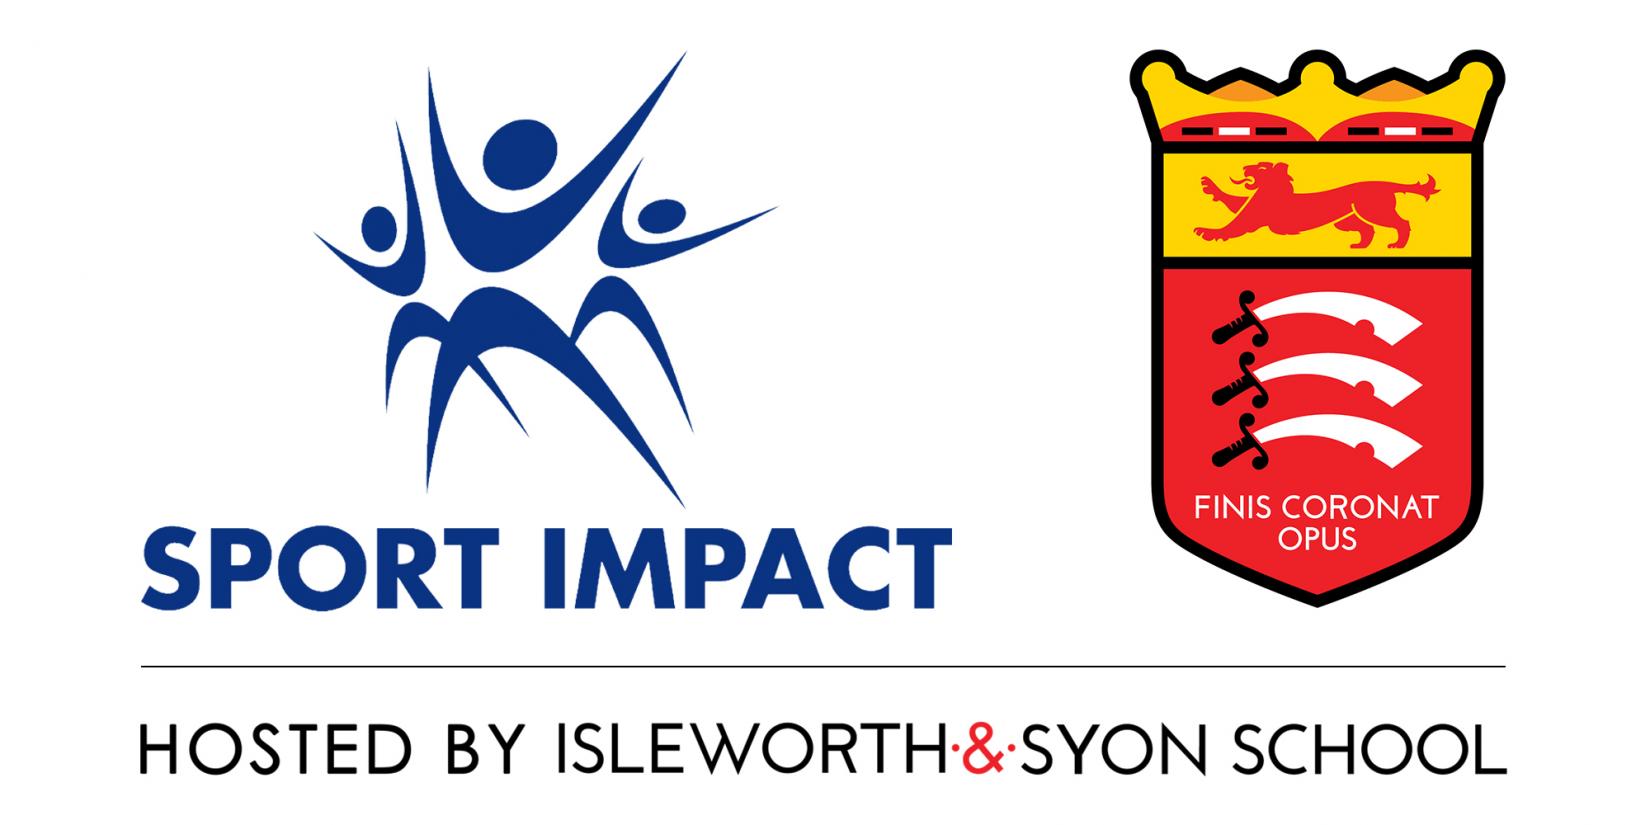 Sport Impact logo